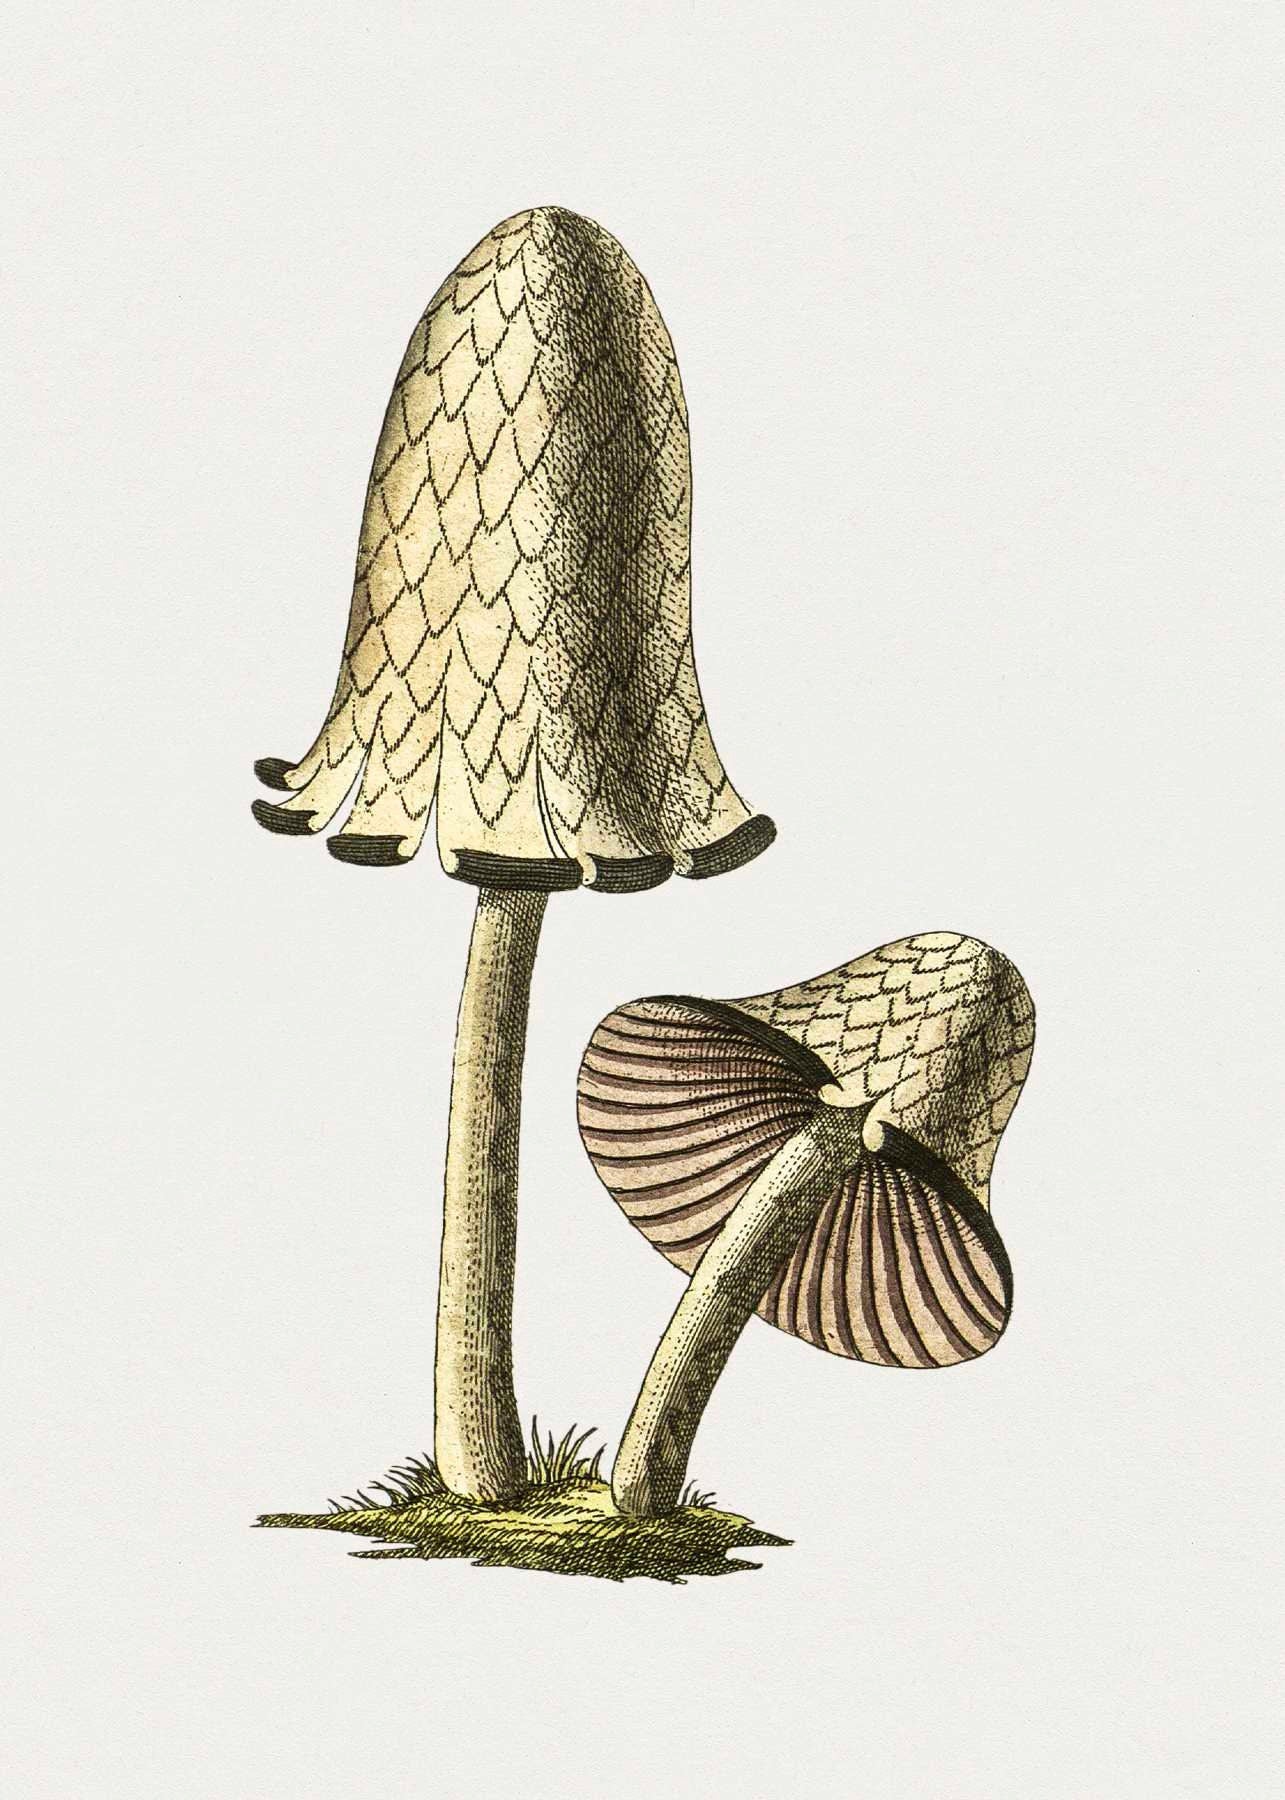 Vintage inky cap edible mushroom fungi nature botanics botanical art vintage illustration Poster Wall Hanging Decor